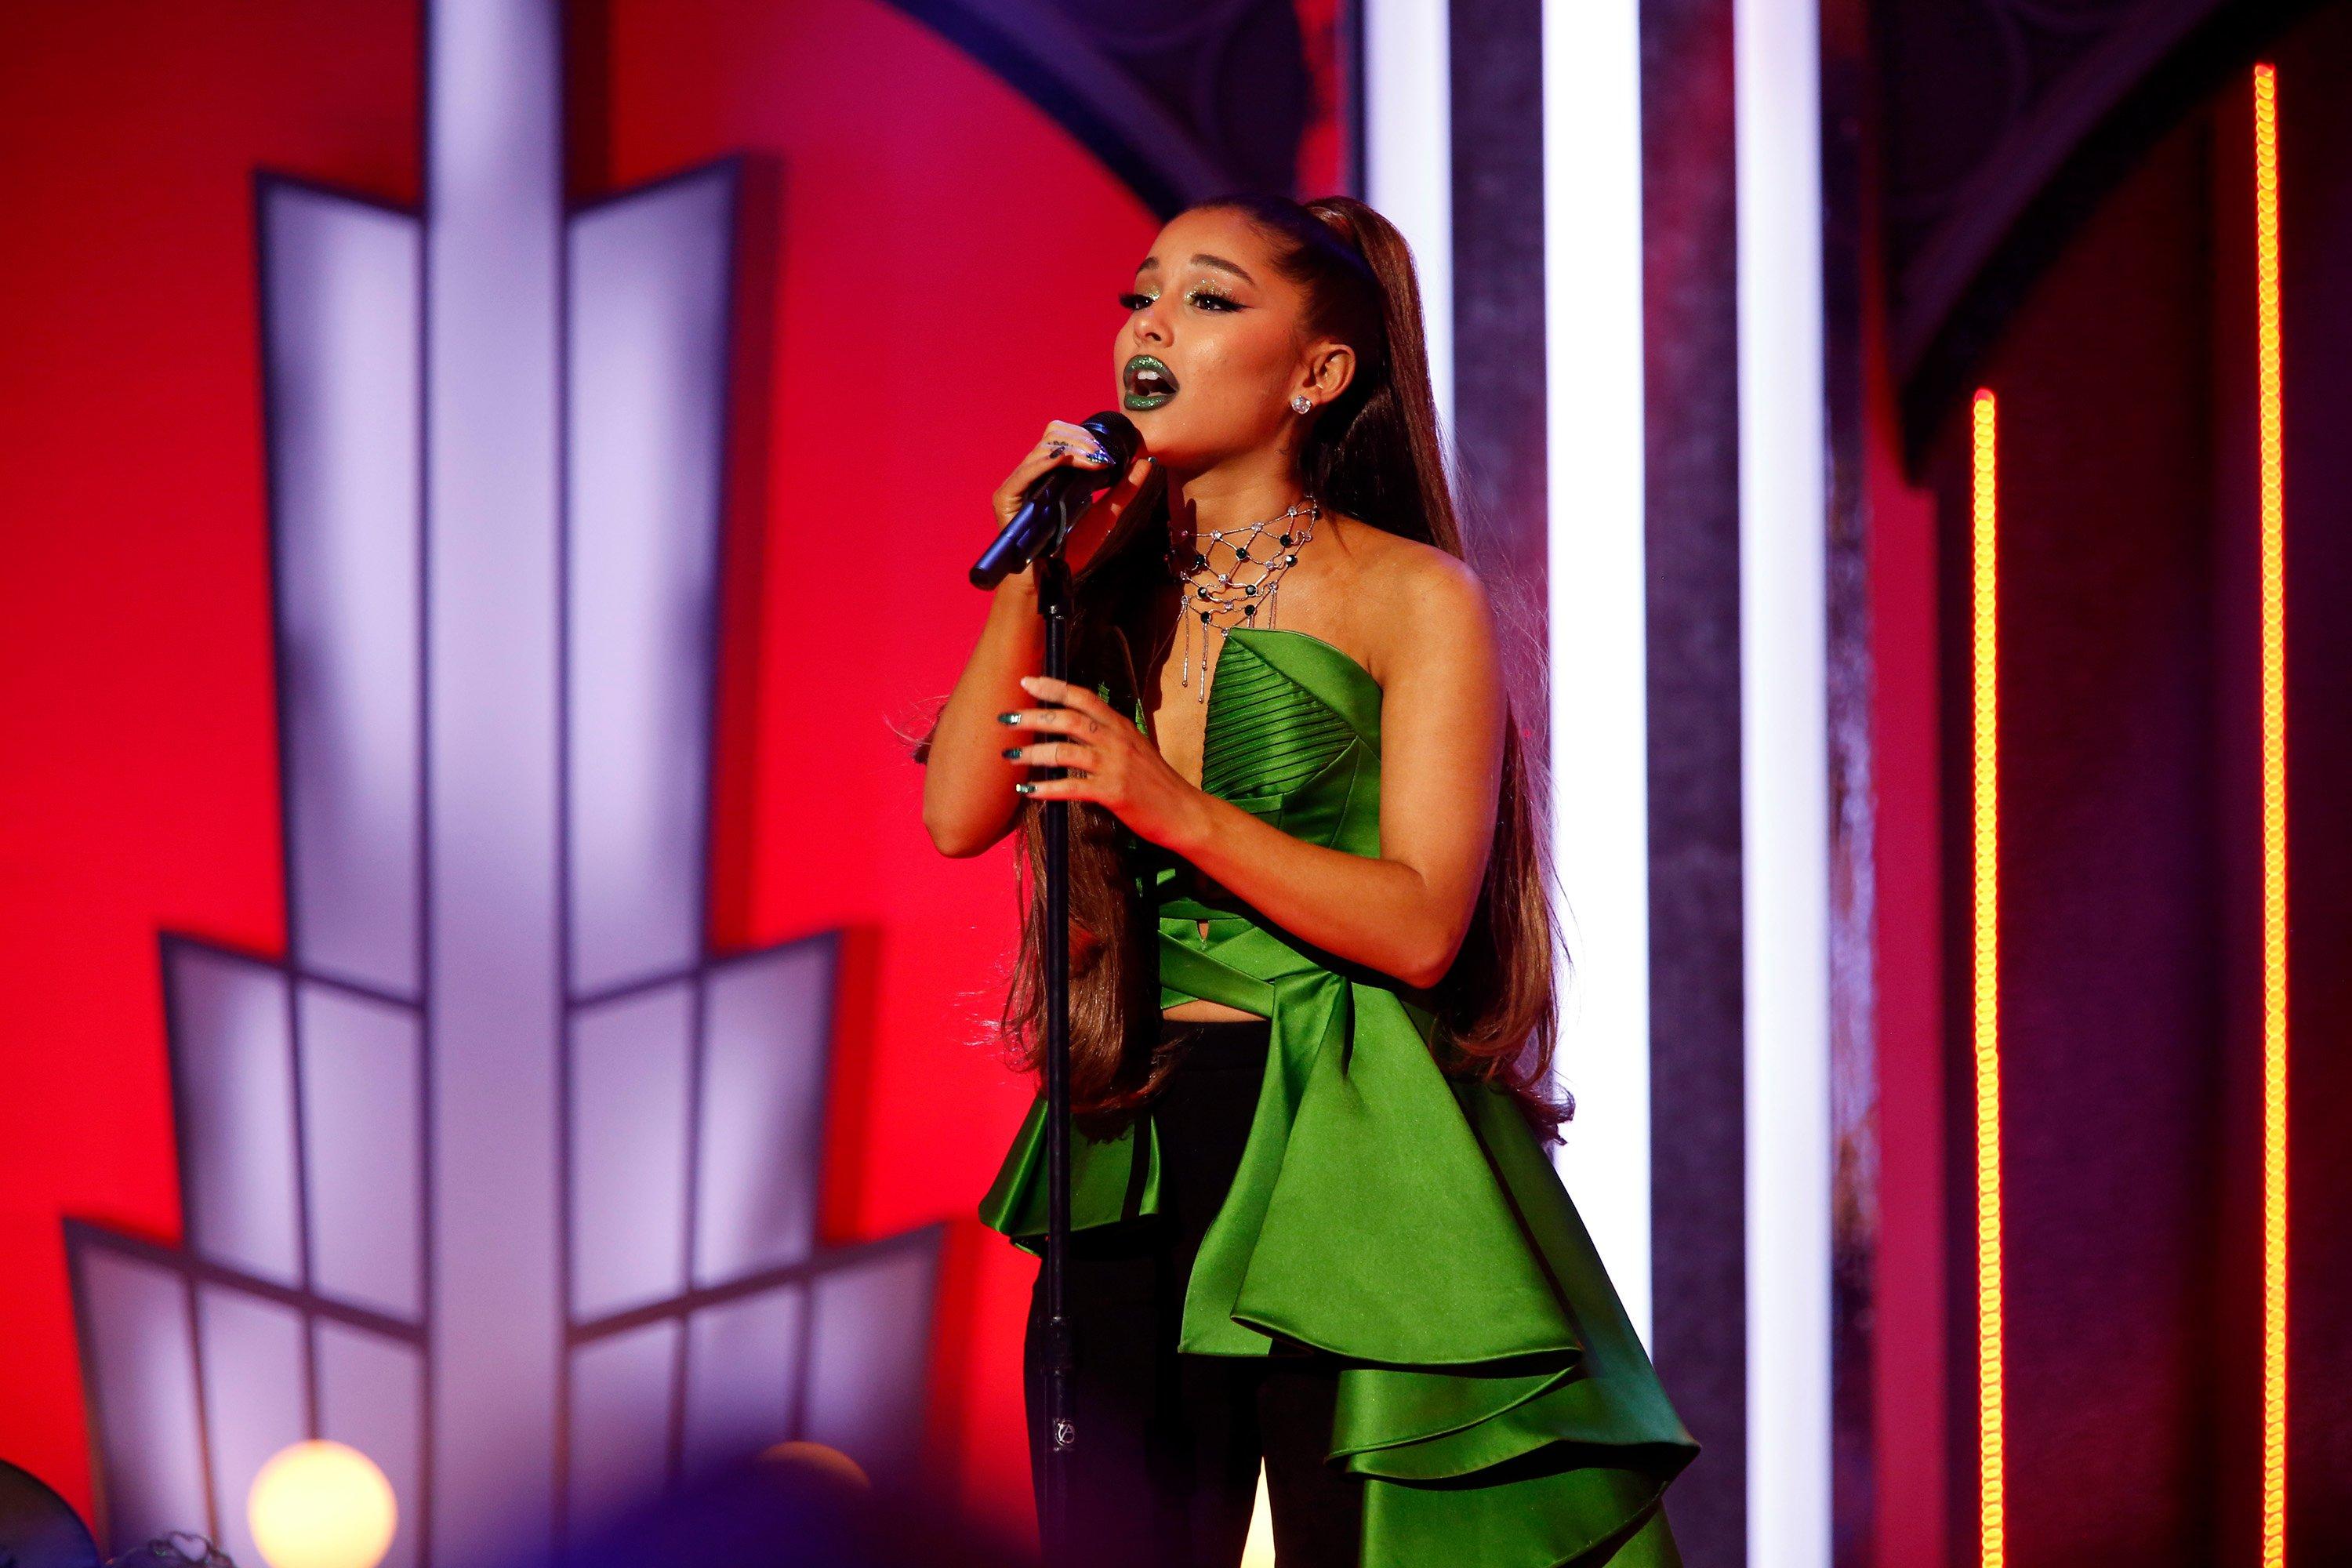 An emotional journey: Ariana Grande speaks her truth in new album